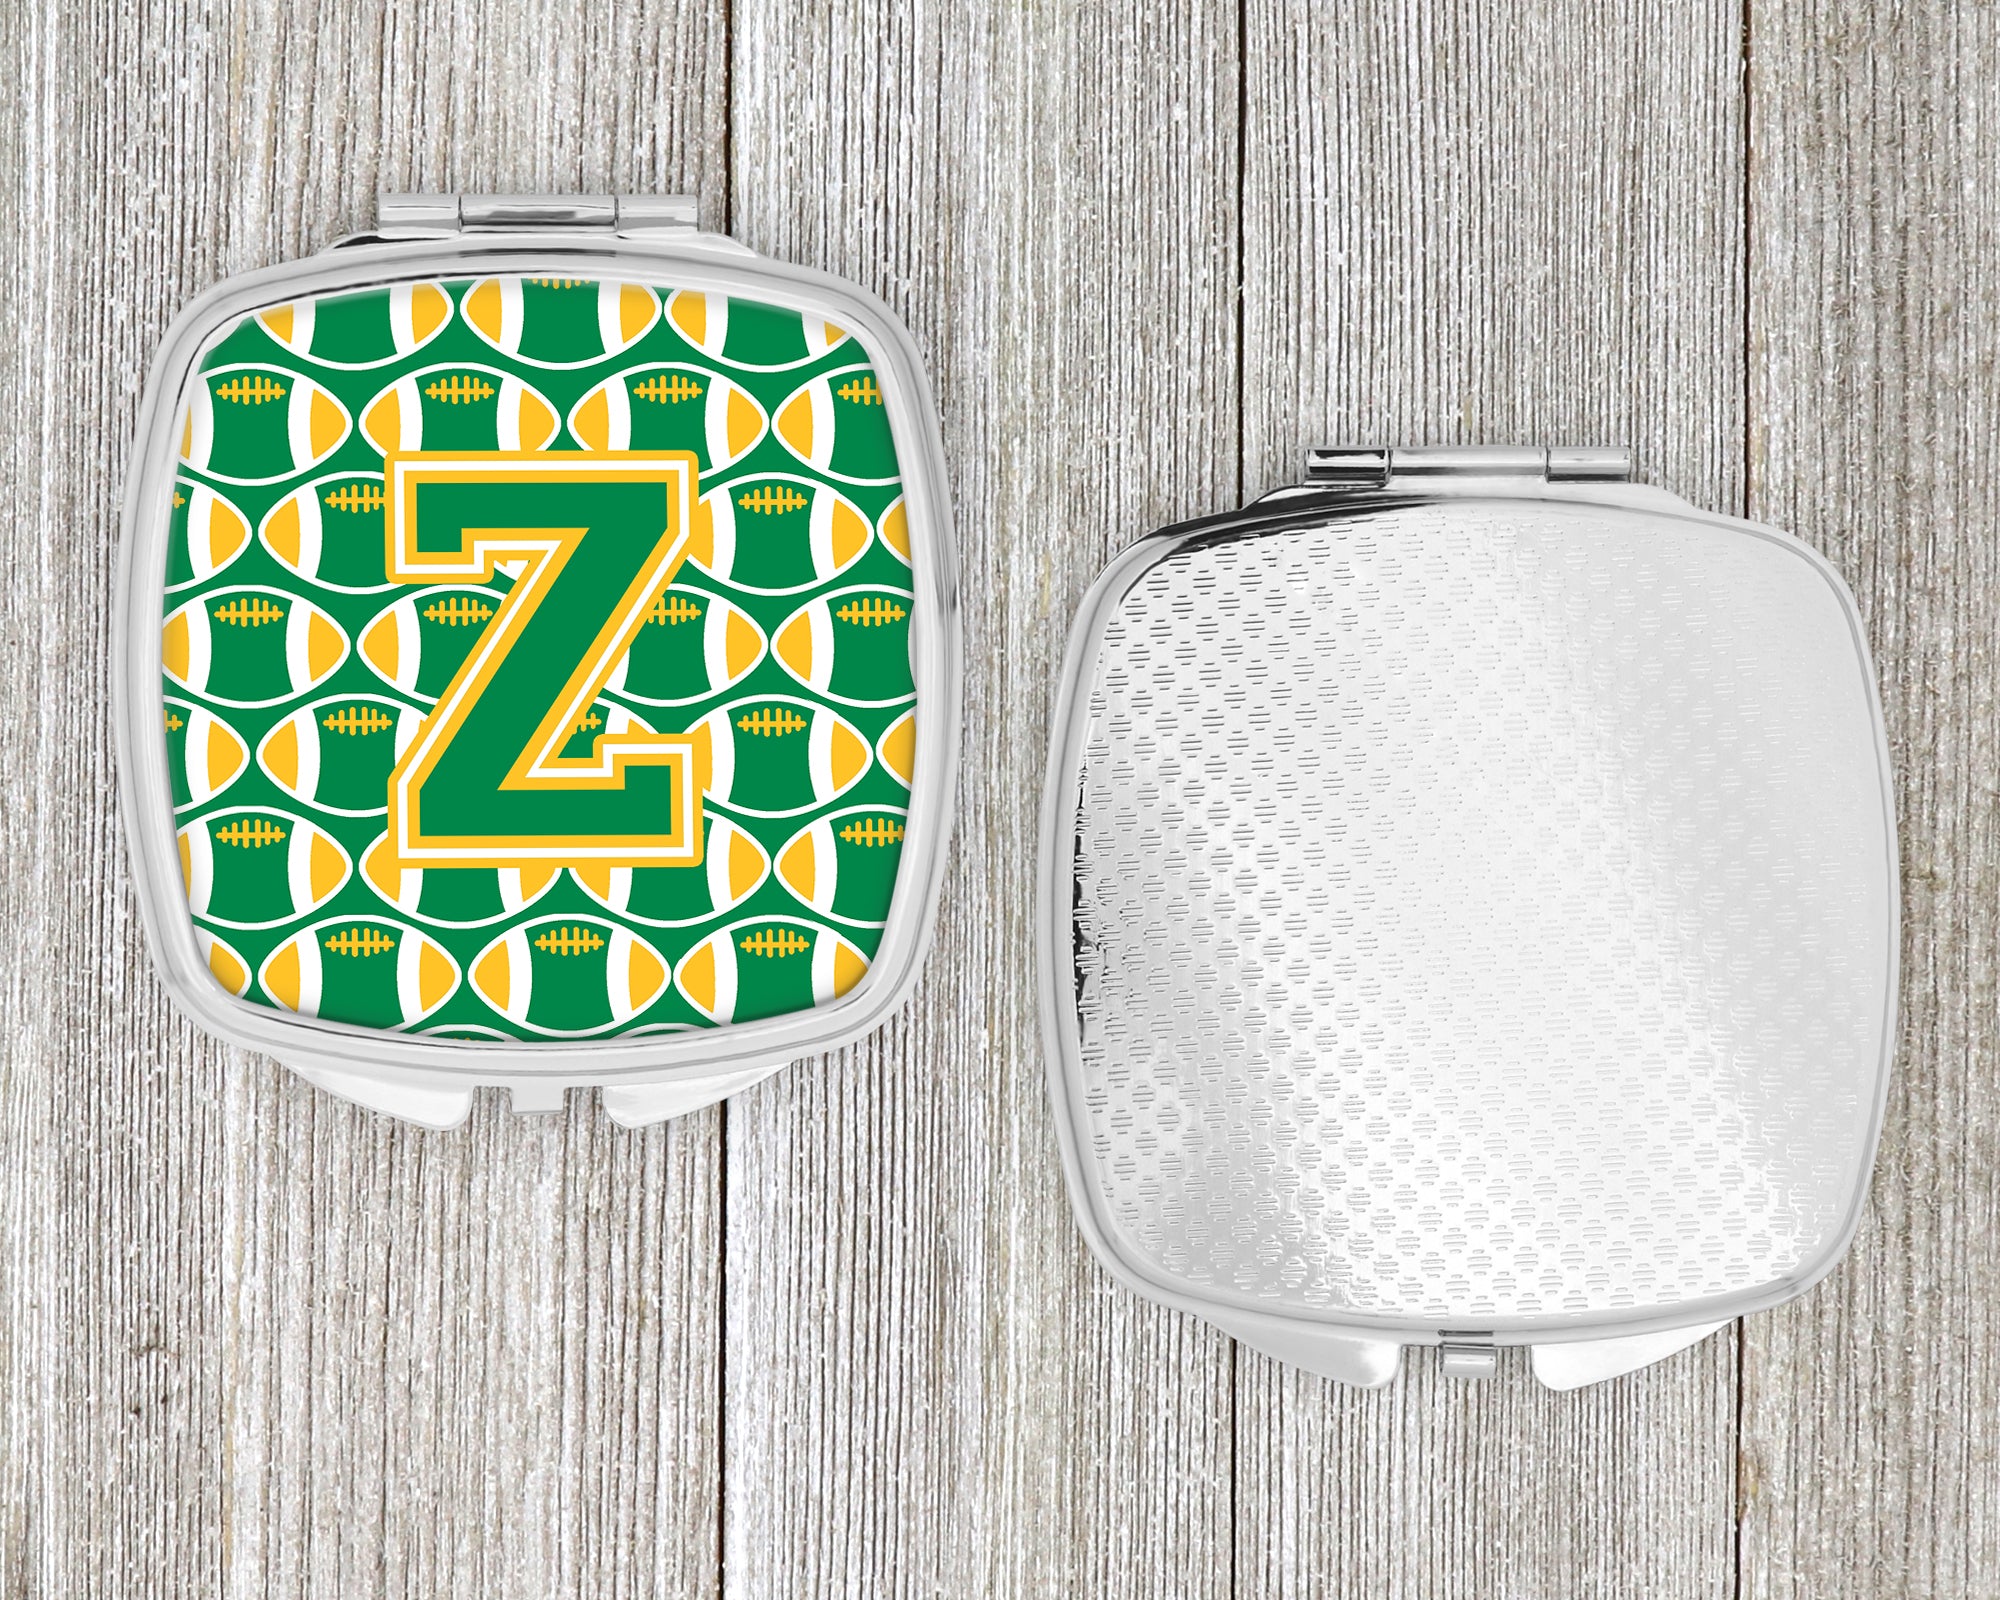 Miroir compact lettre Z football vert et or CJ1069-ZSCM